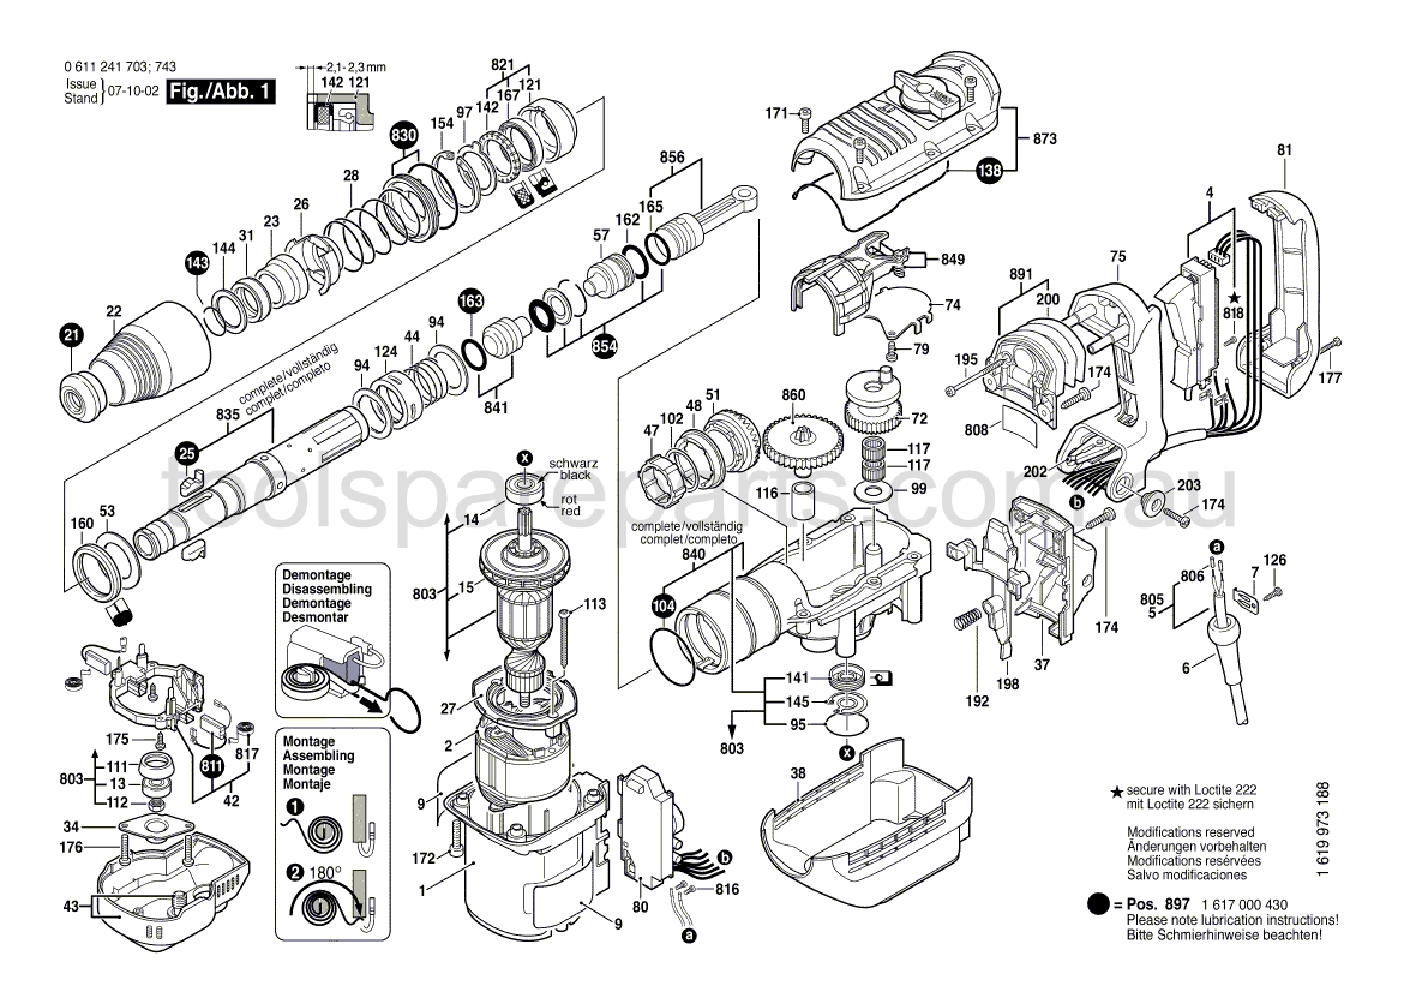 Bosch GBH 5-40 DE 0611241737  Diagram 1